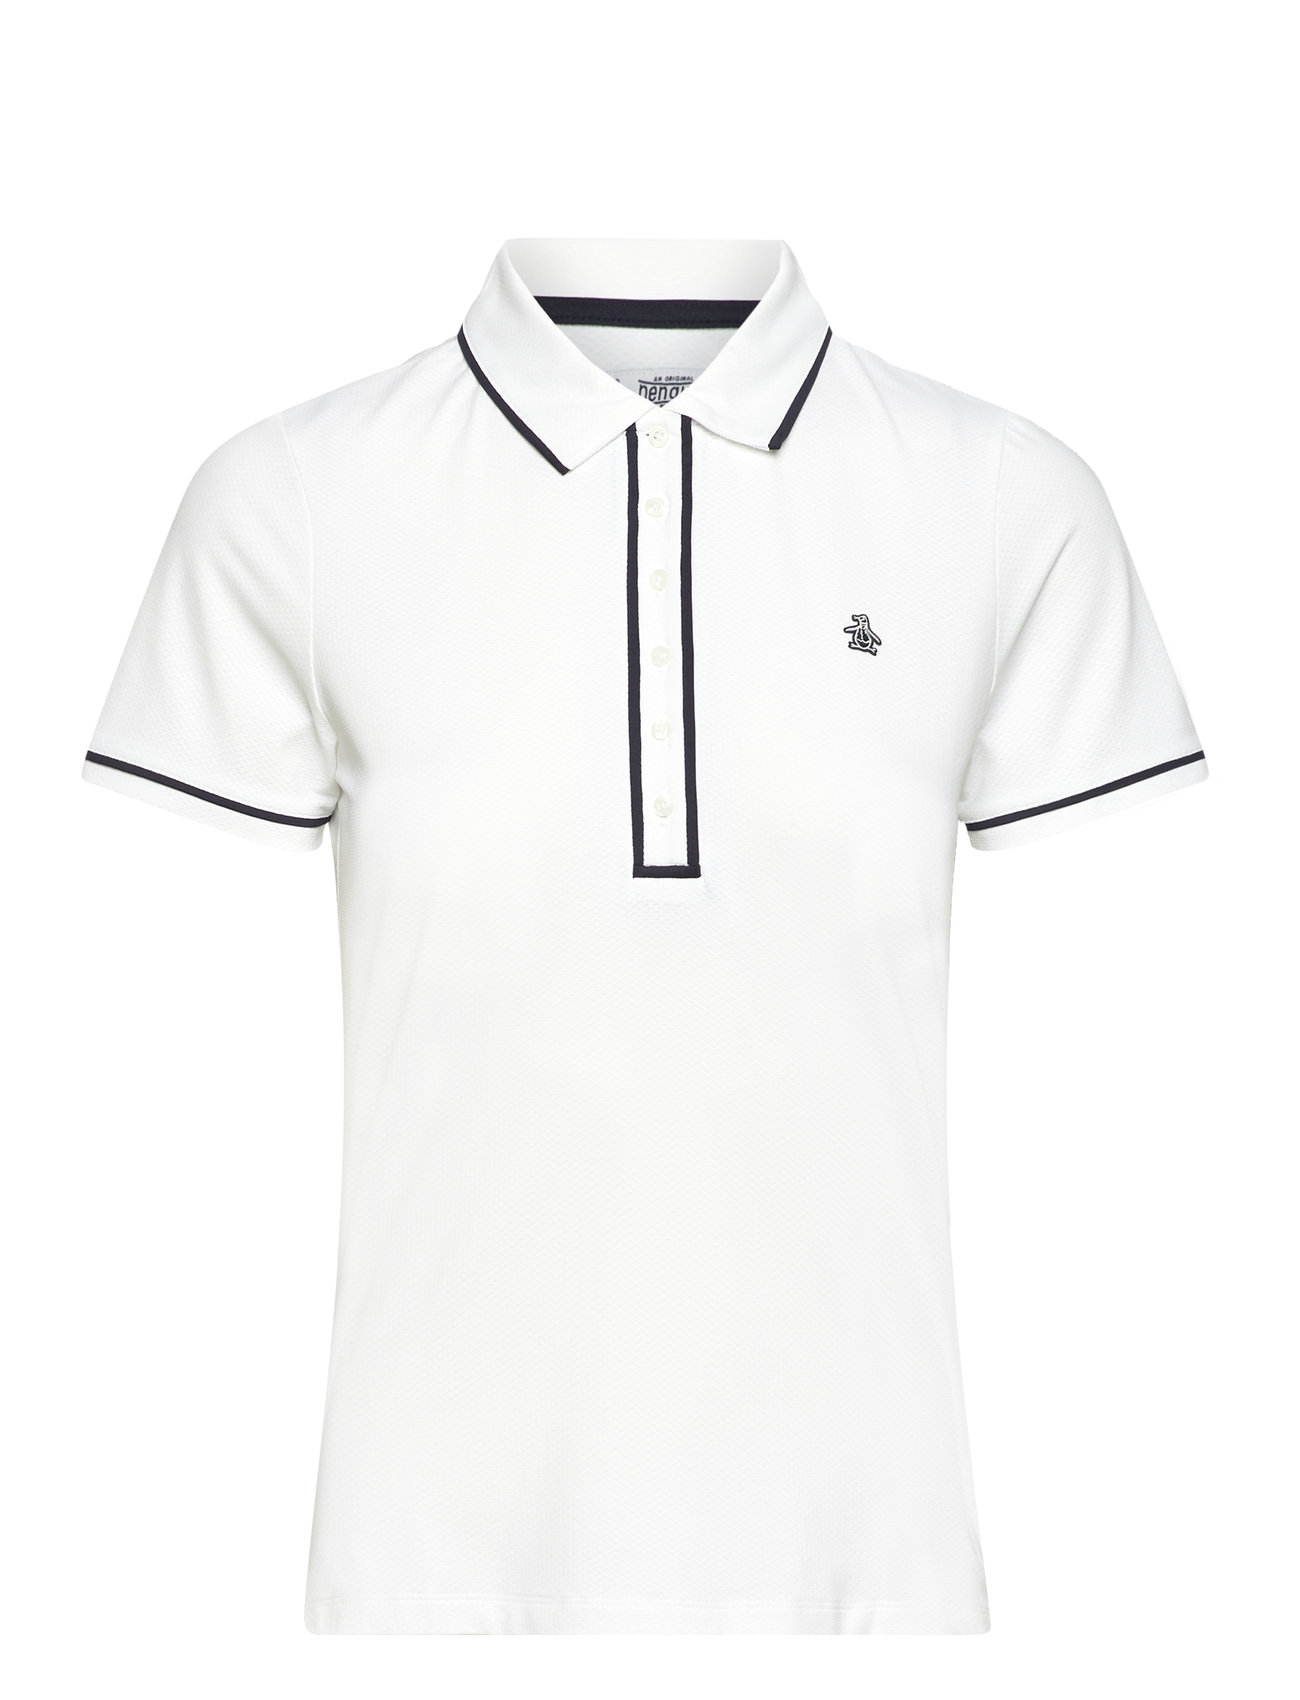 Performance Veronica Polo Tops T-shirts & Tops Polos White Original Penguin Golf